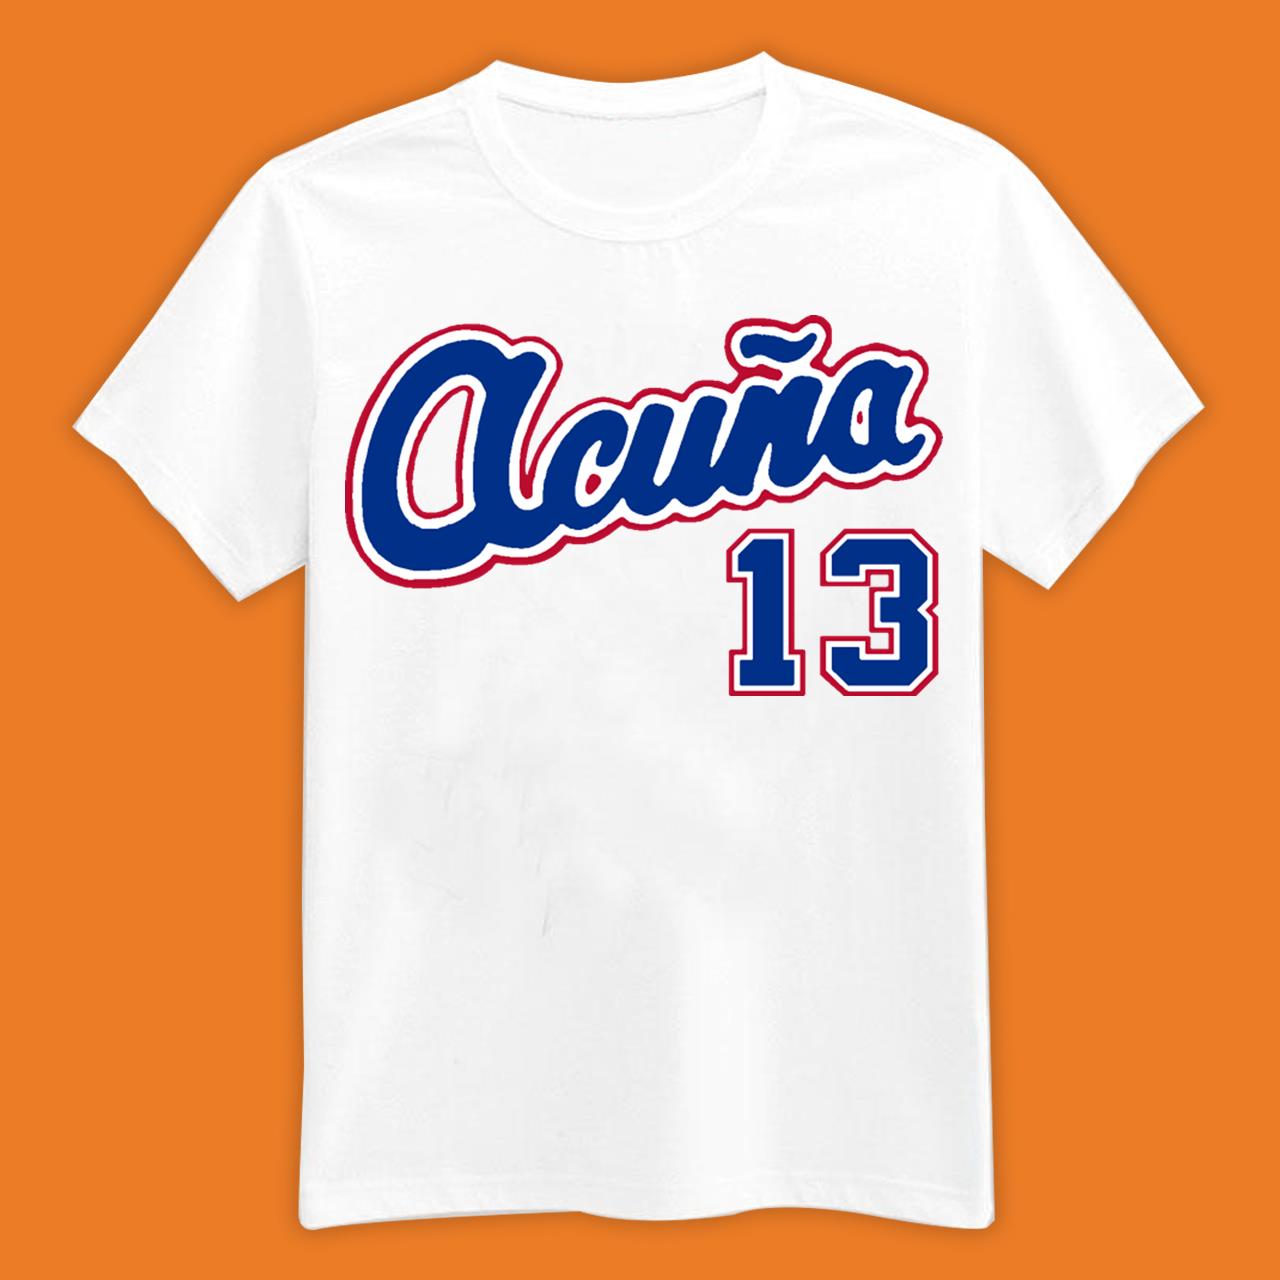 Acuna 13 Vintage T-Shirt